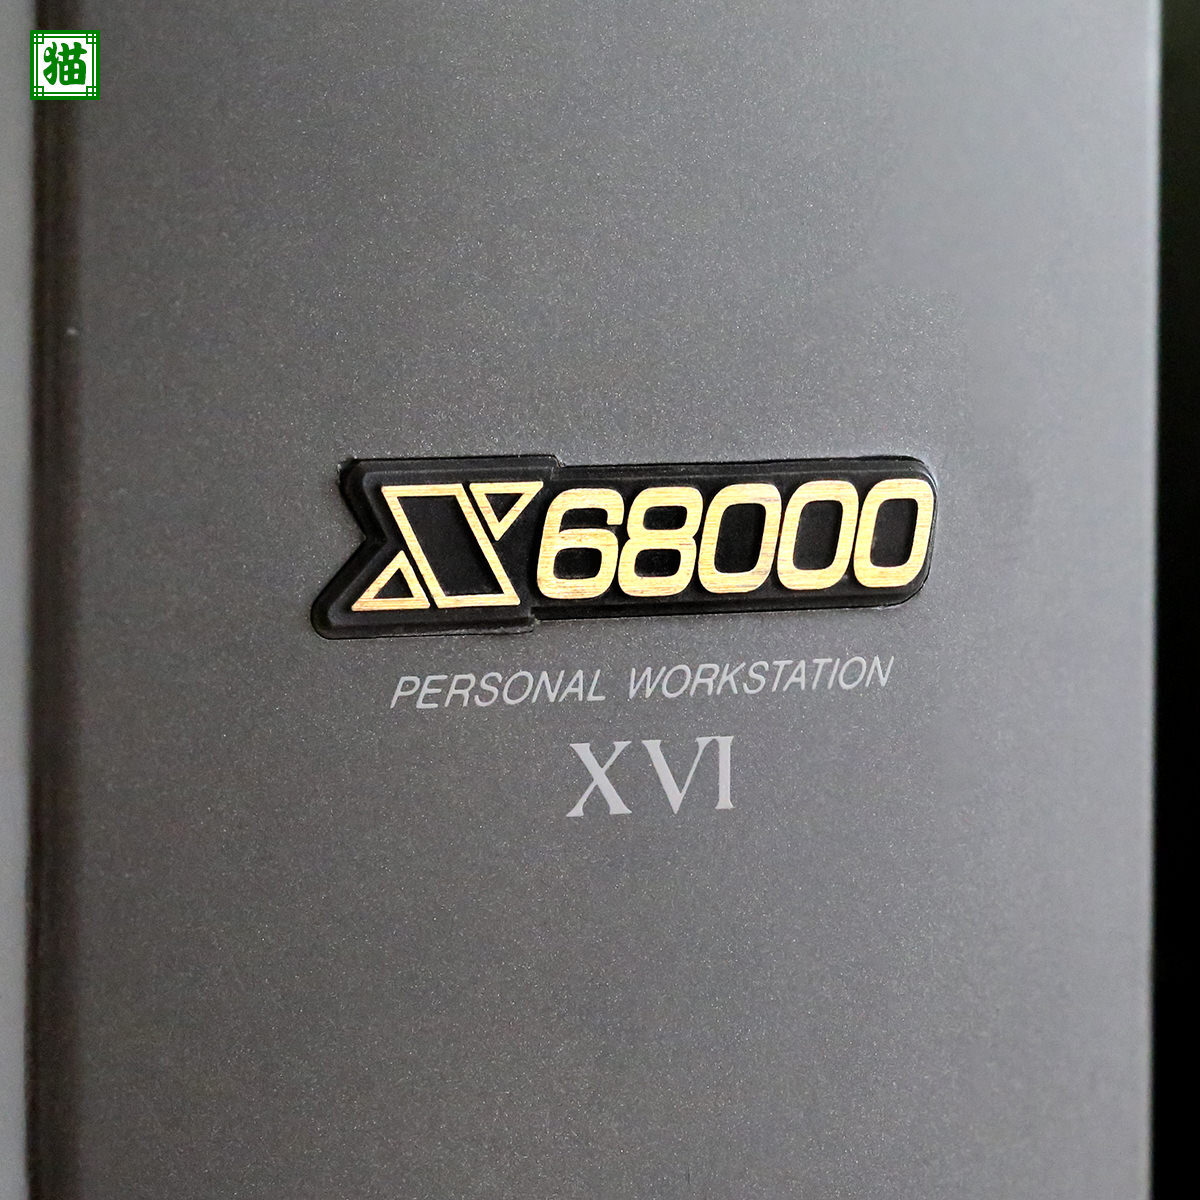 SHARP X68000 XVI CZ-634C-TN RAM:2MB HDD:なし 静音ファン搭載【オーバーホール済・送料無料】_SHARP X68000 XVI CZ-634C-TN 2MB